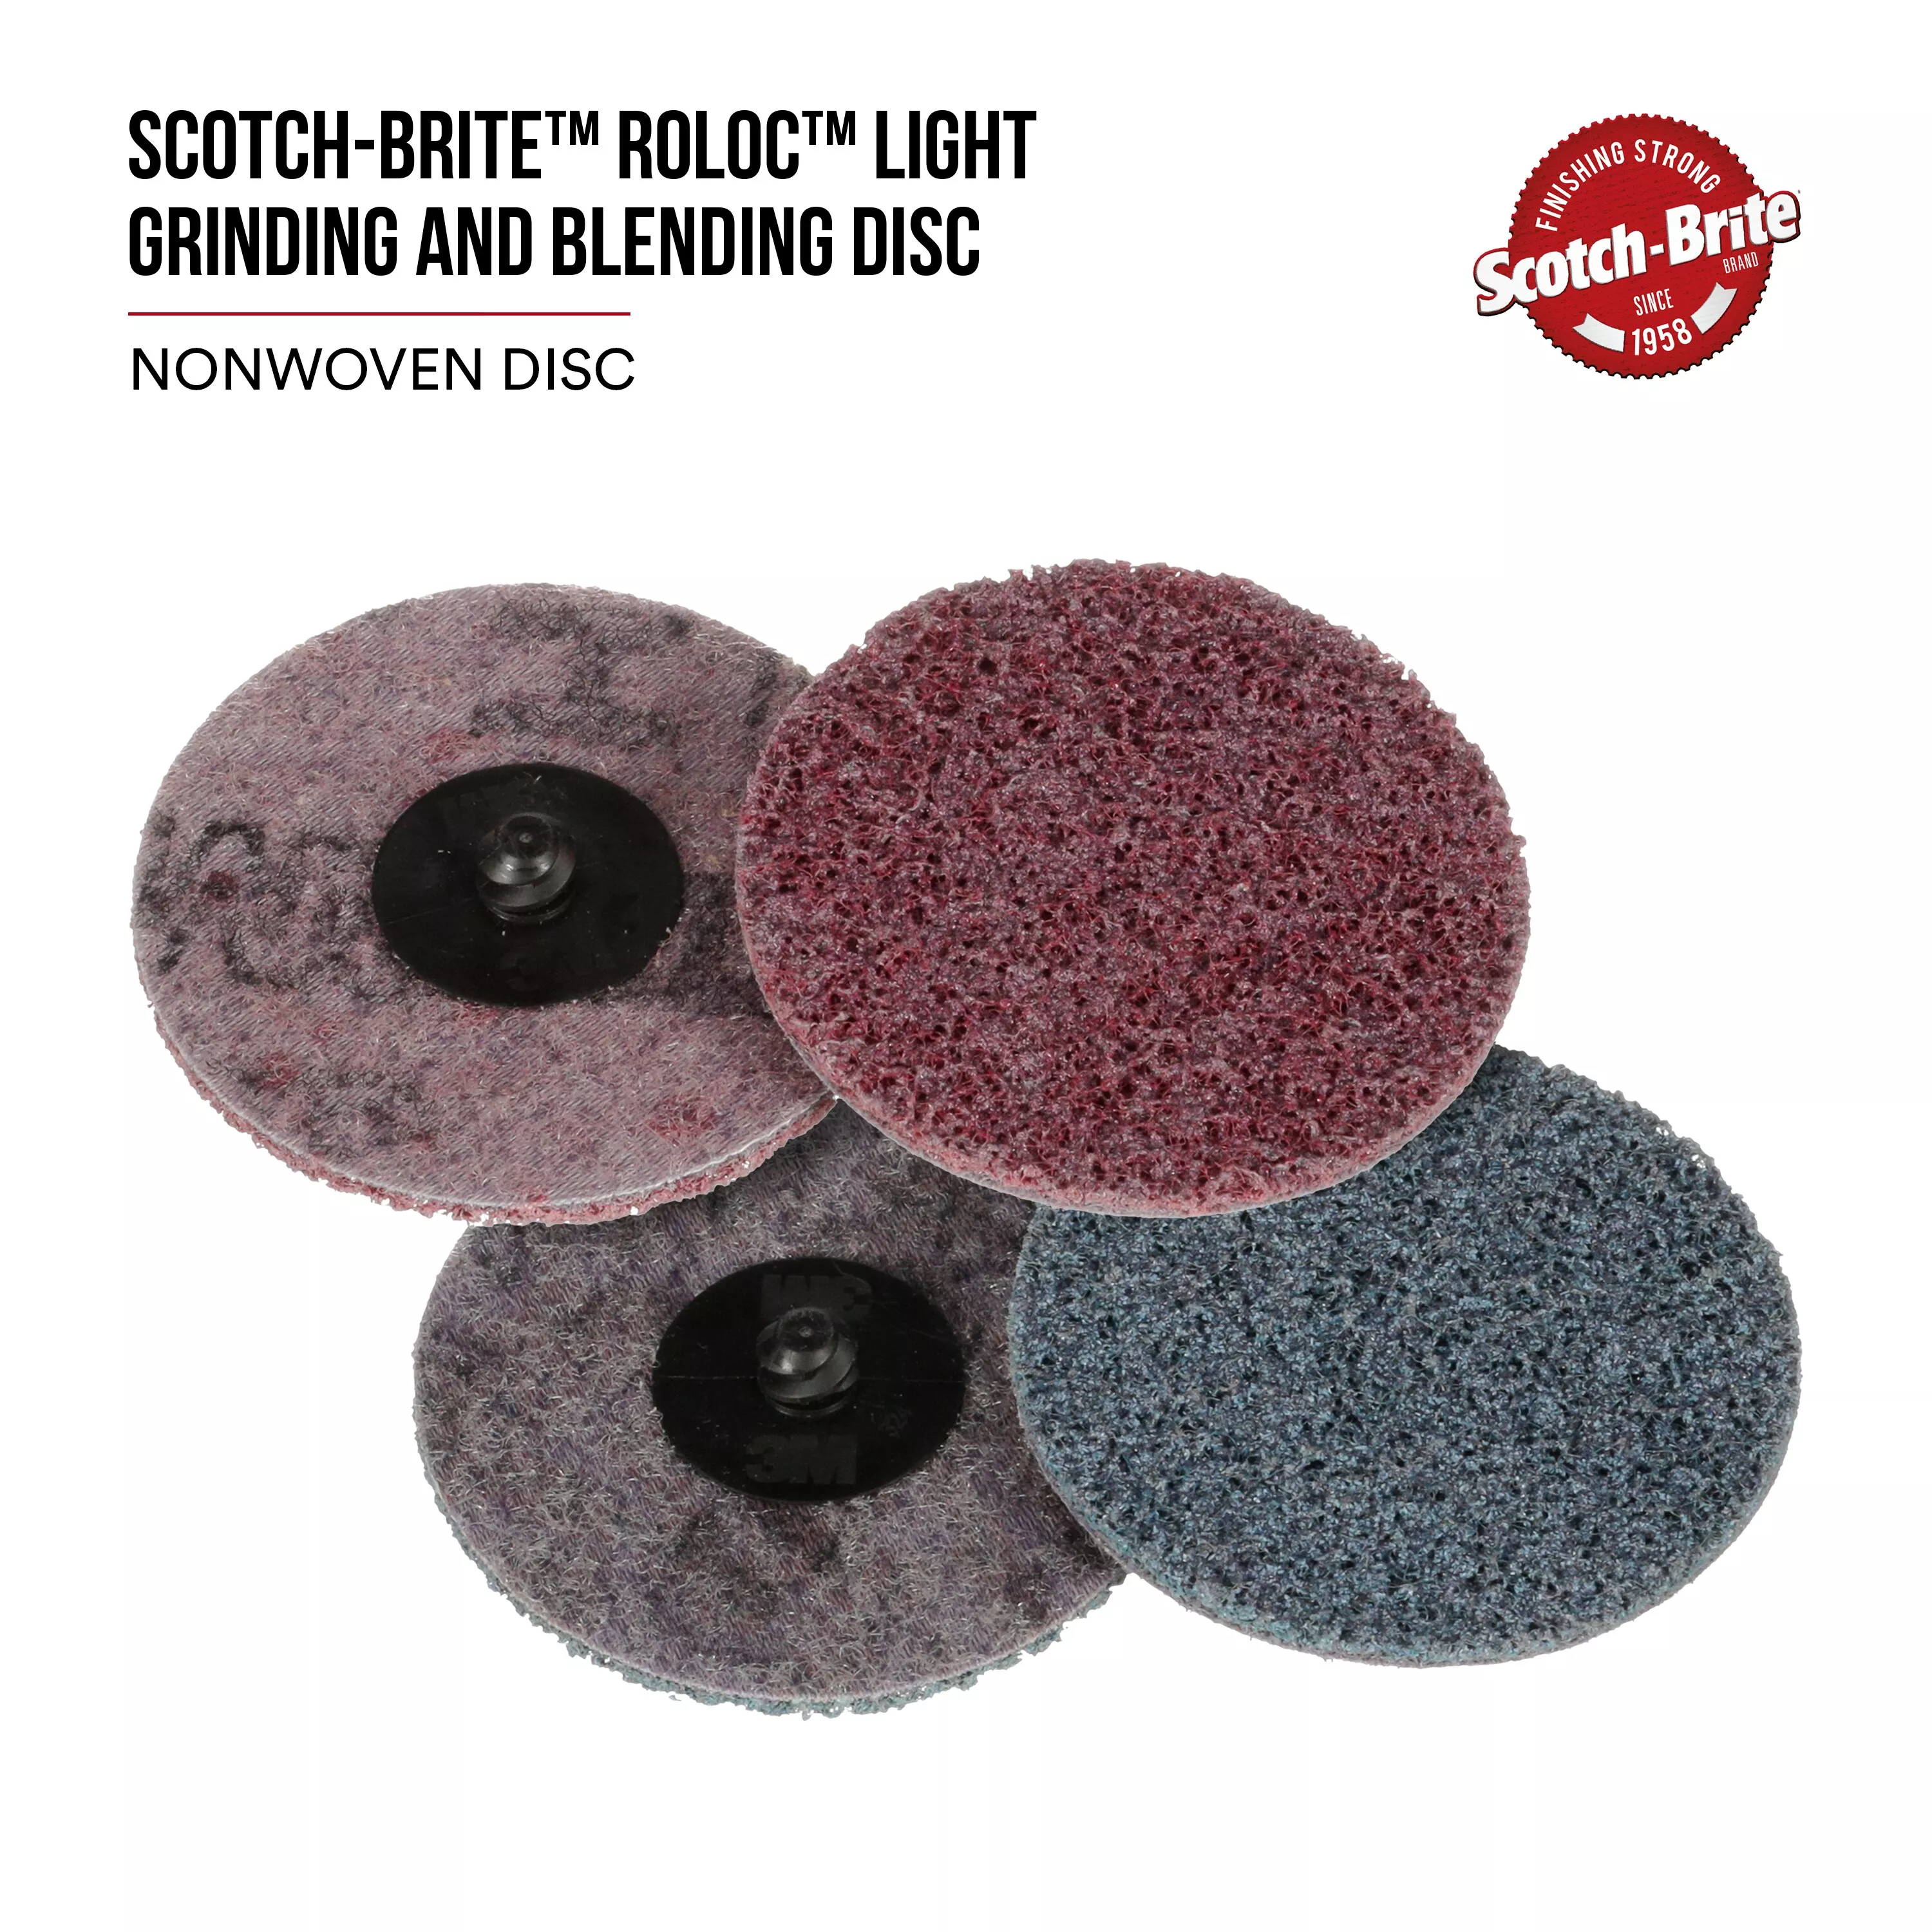 SKU 7010329836 | Scotch-Brite™ Roloc™ Light Grinding and Blending Disc